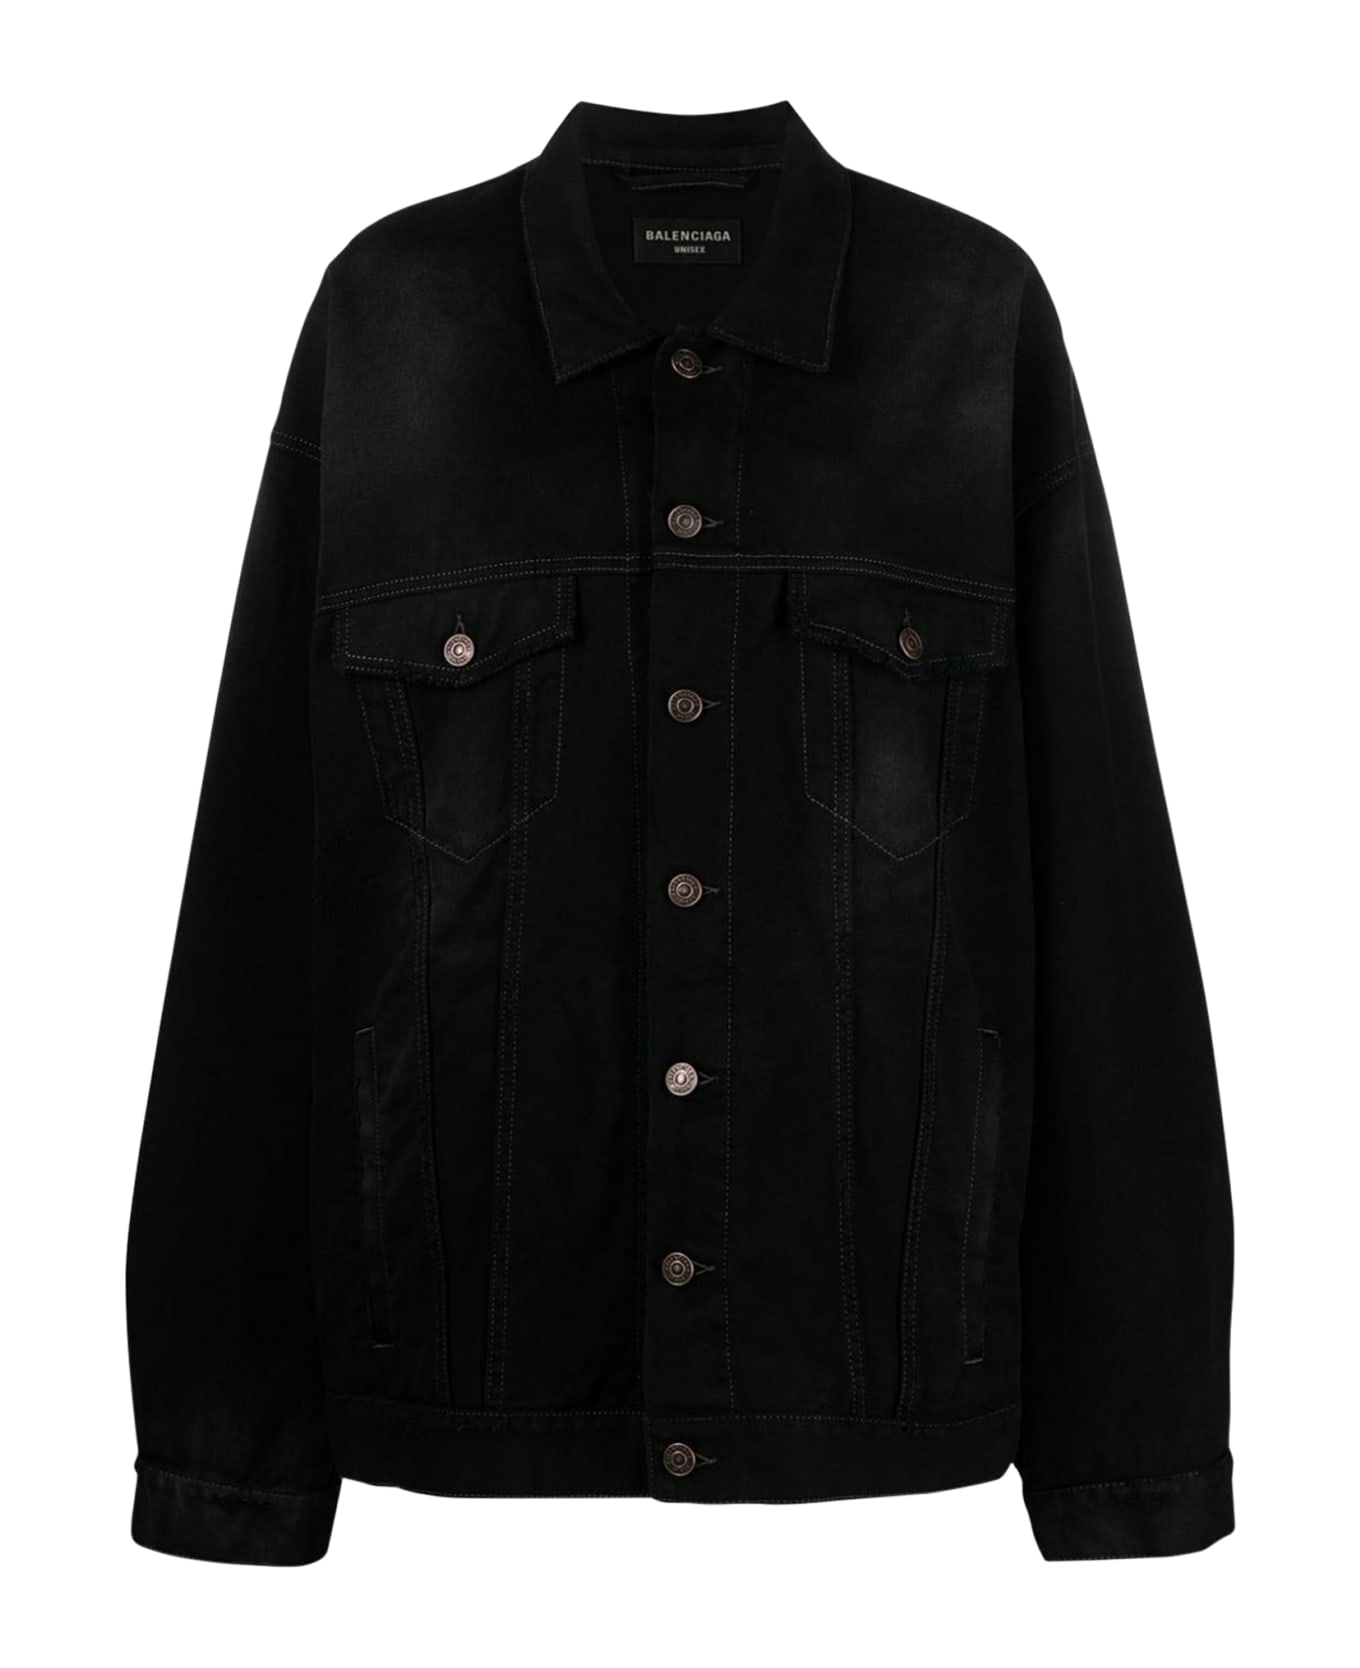 Balenciaga Oversized Jacket - Matte Black